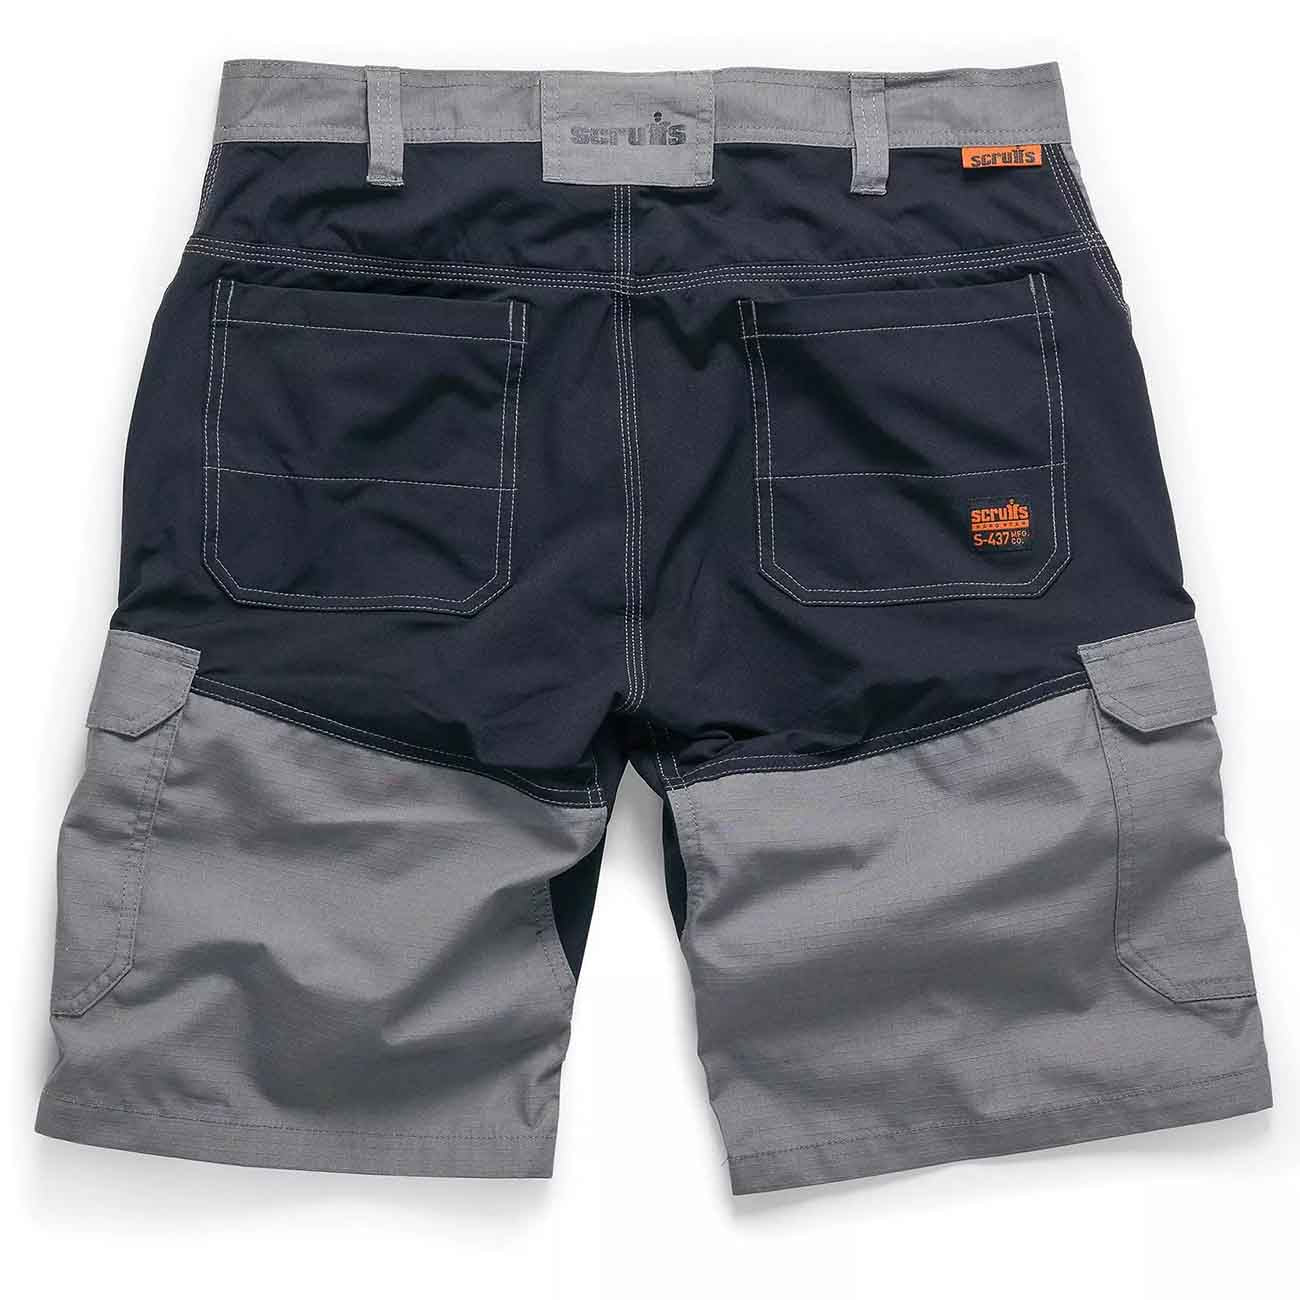 Scruffs Trade Flex Shorts - Graphite